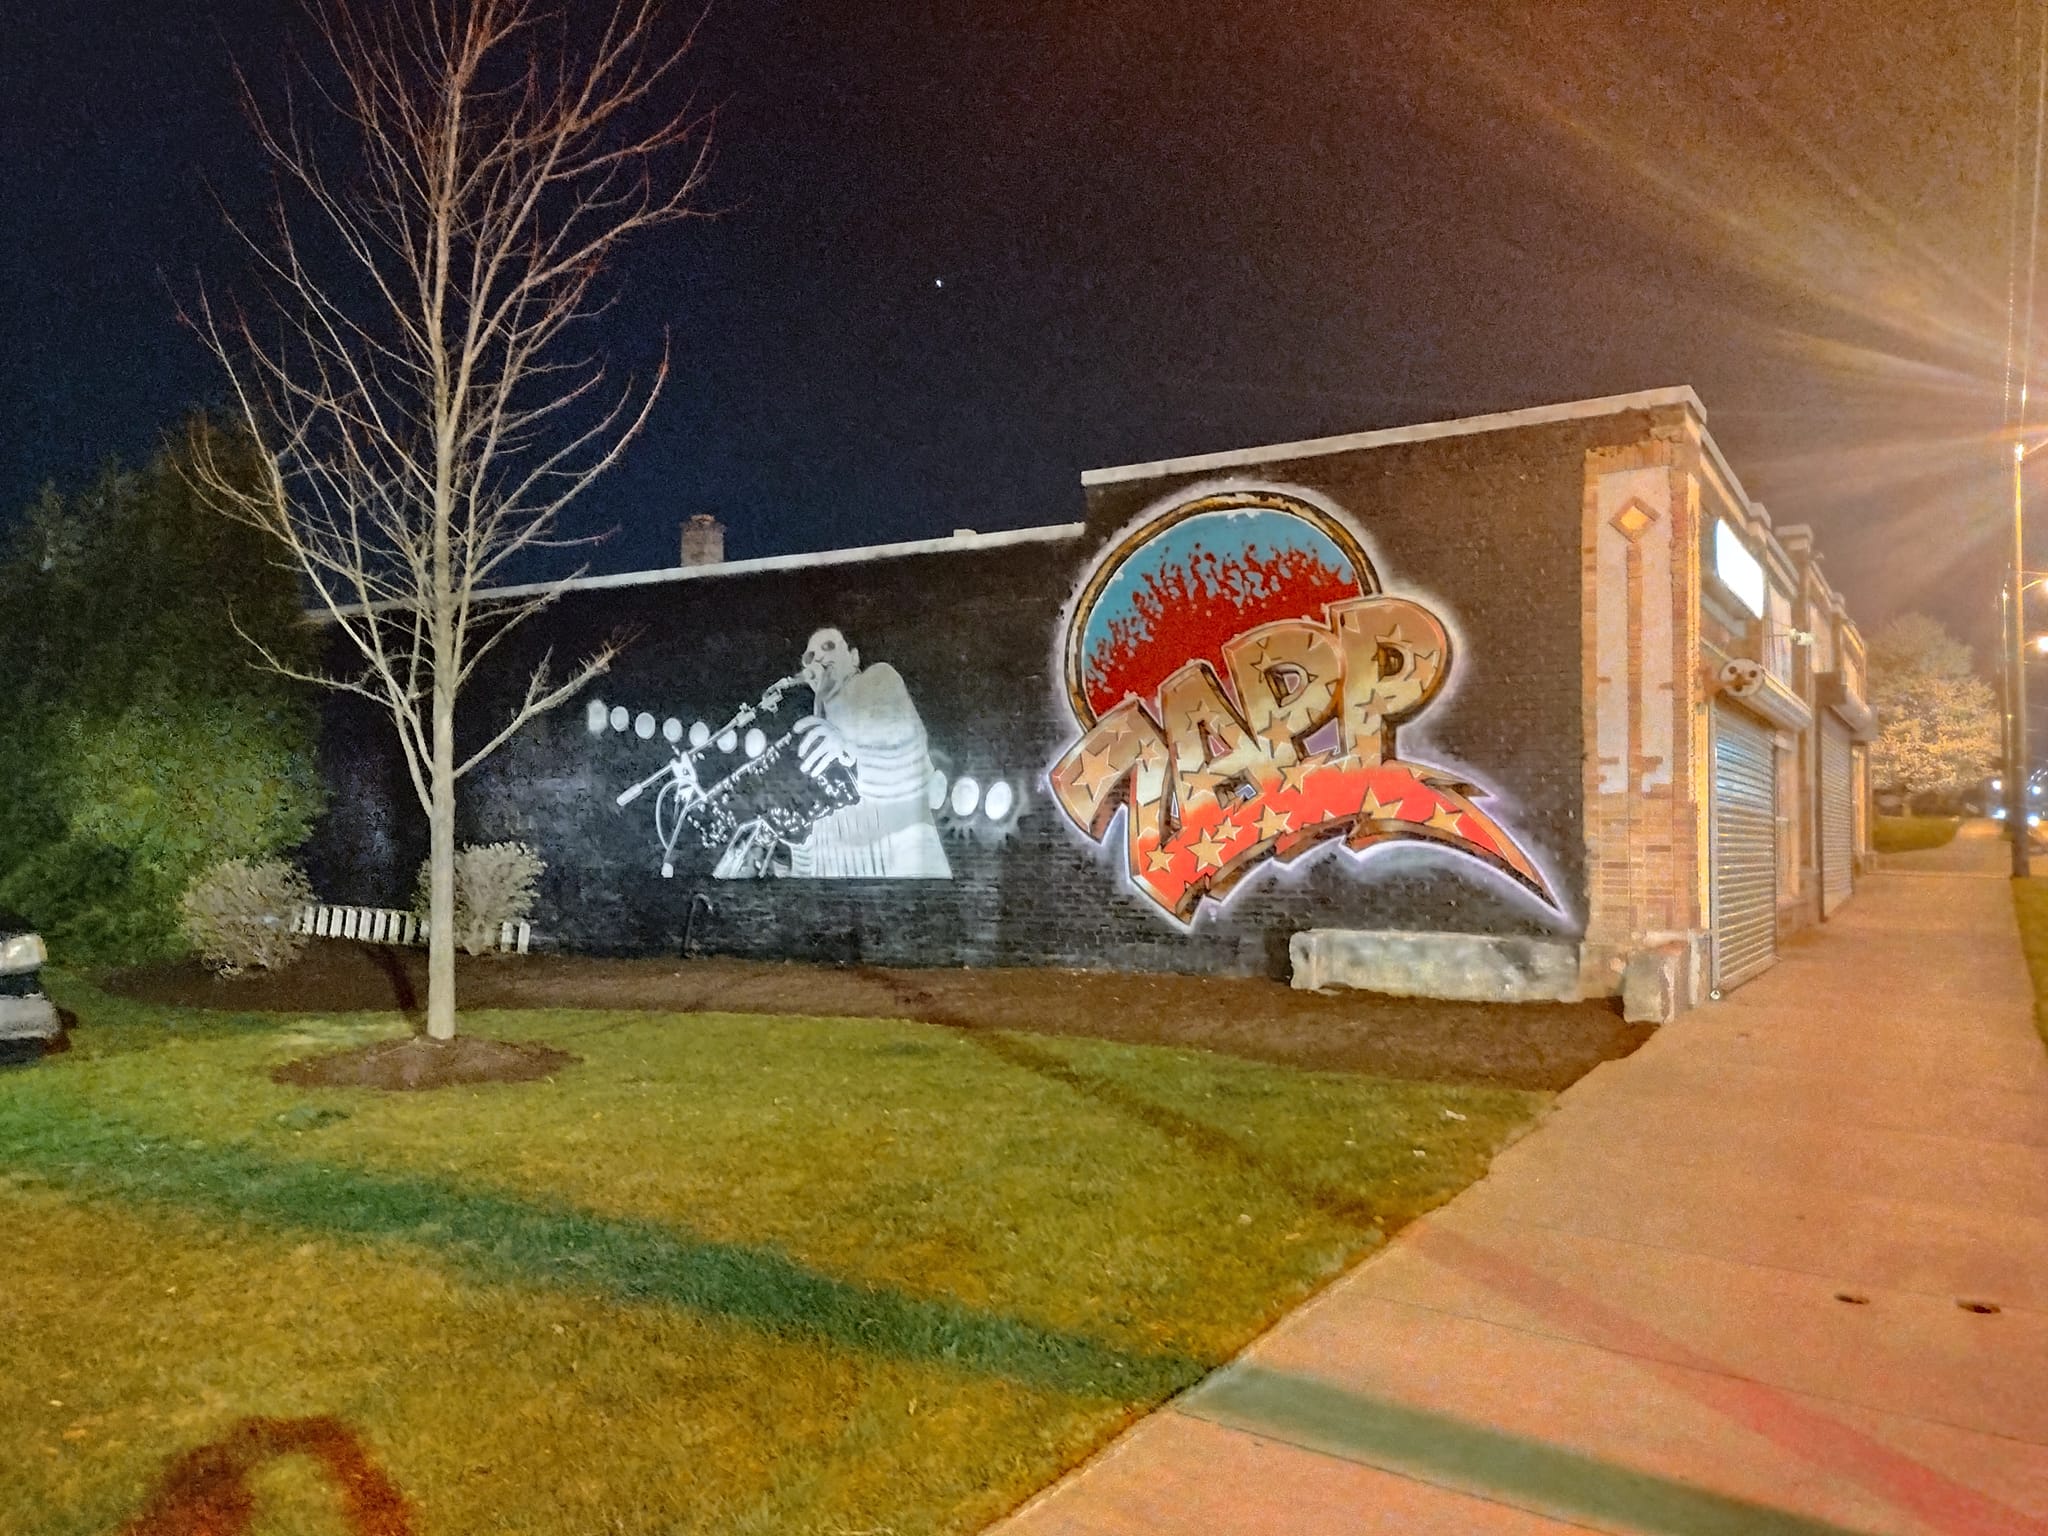 Salem Ave. Dayton, Ohio, Wall mural art by Jon Martin, Zapp wall